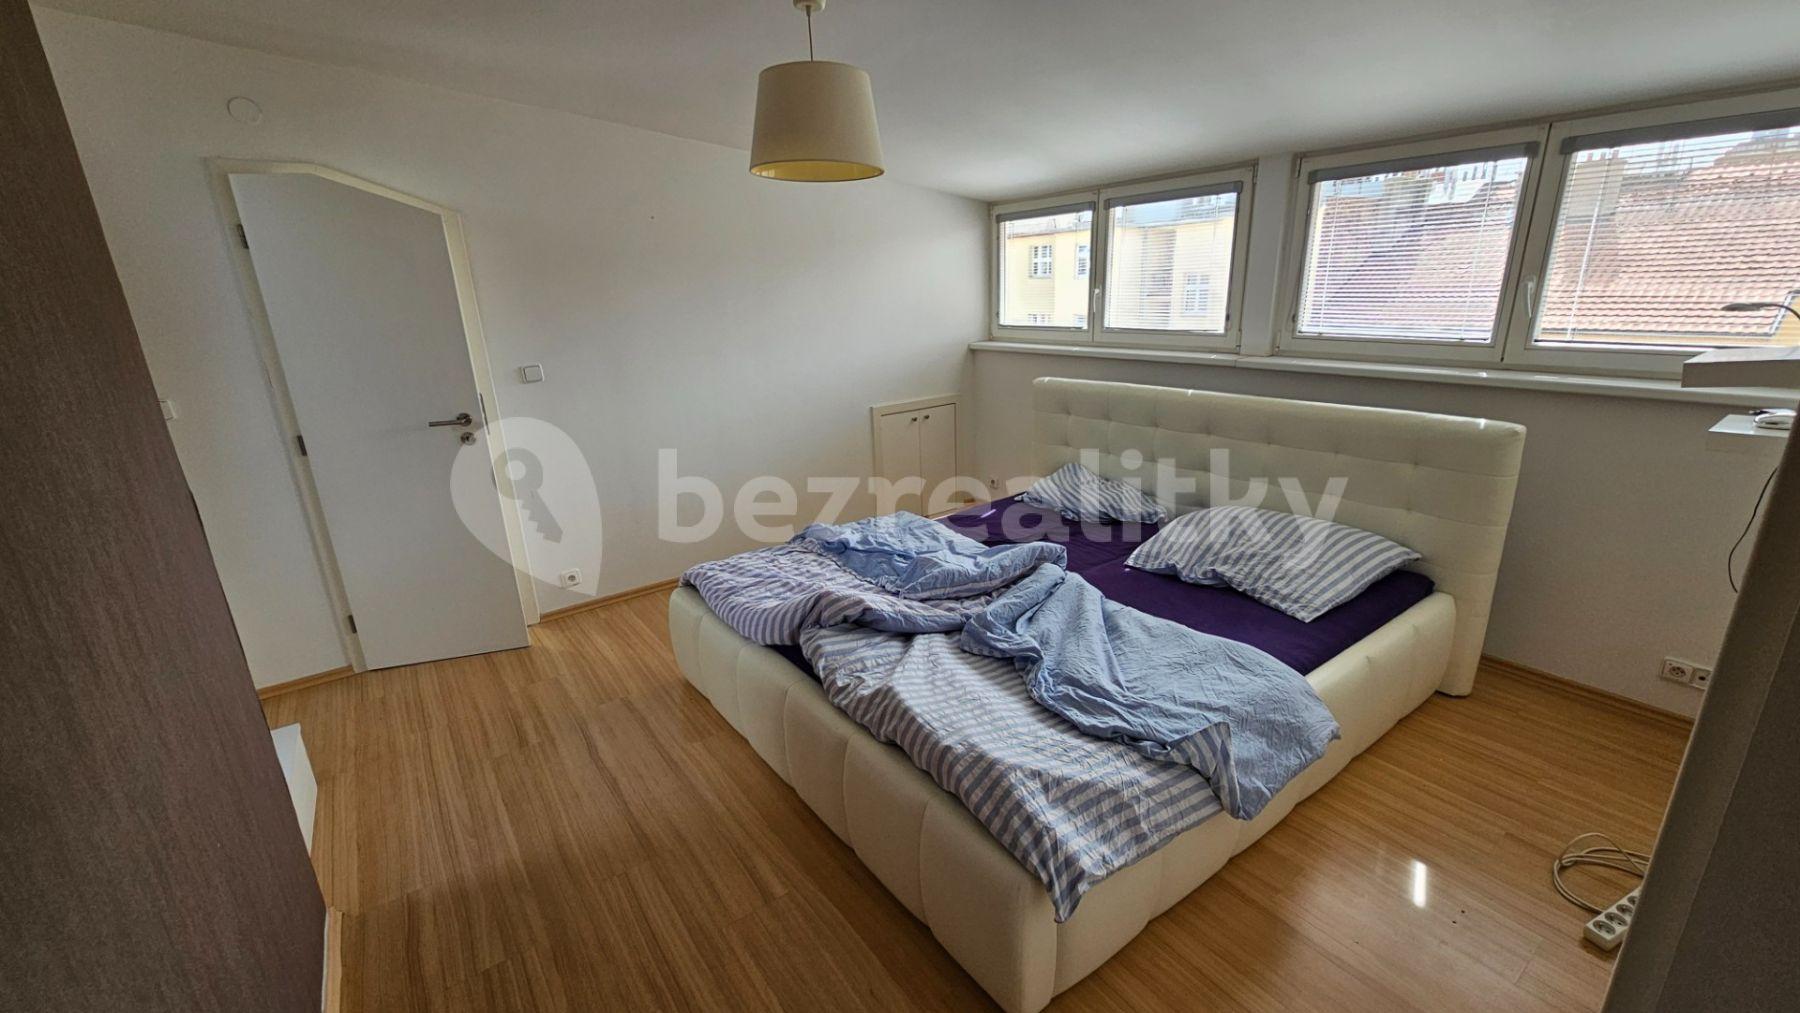 1 bedroom with open-plan kitchen flat to rent, 67 m², Roháčova, Prague, Prague